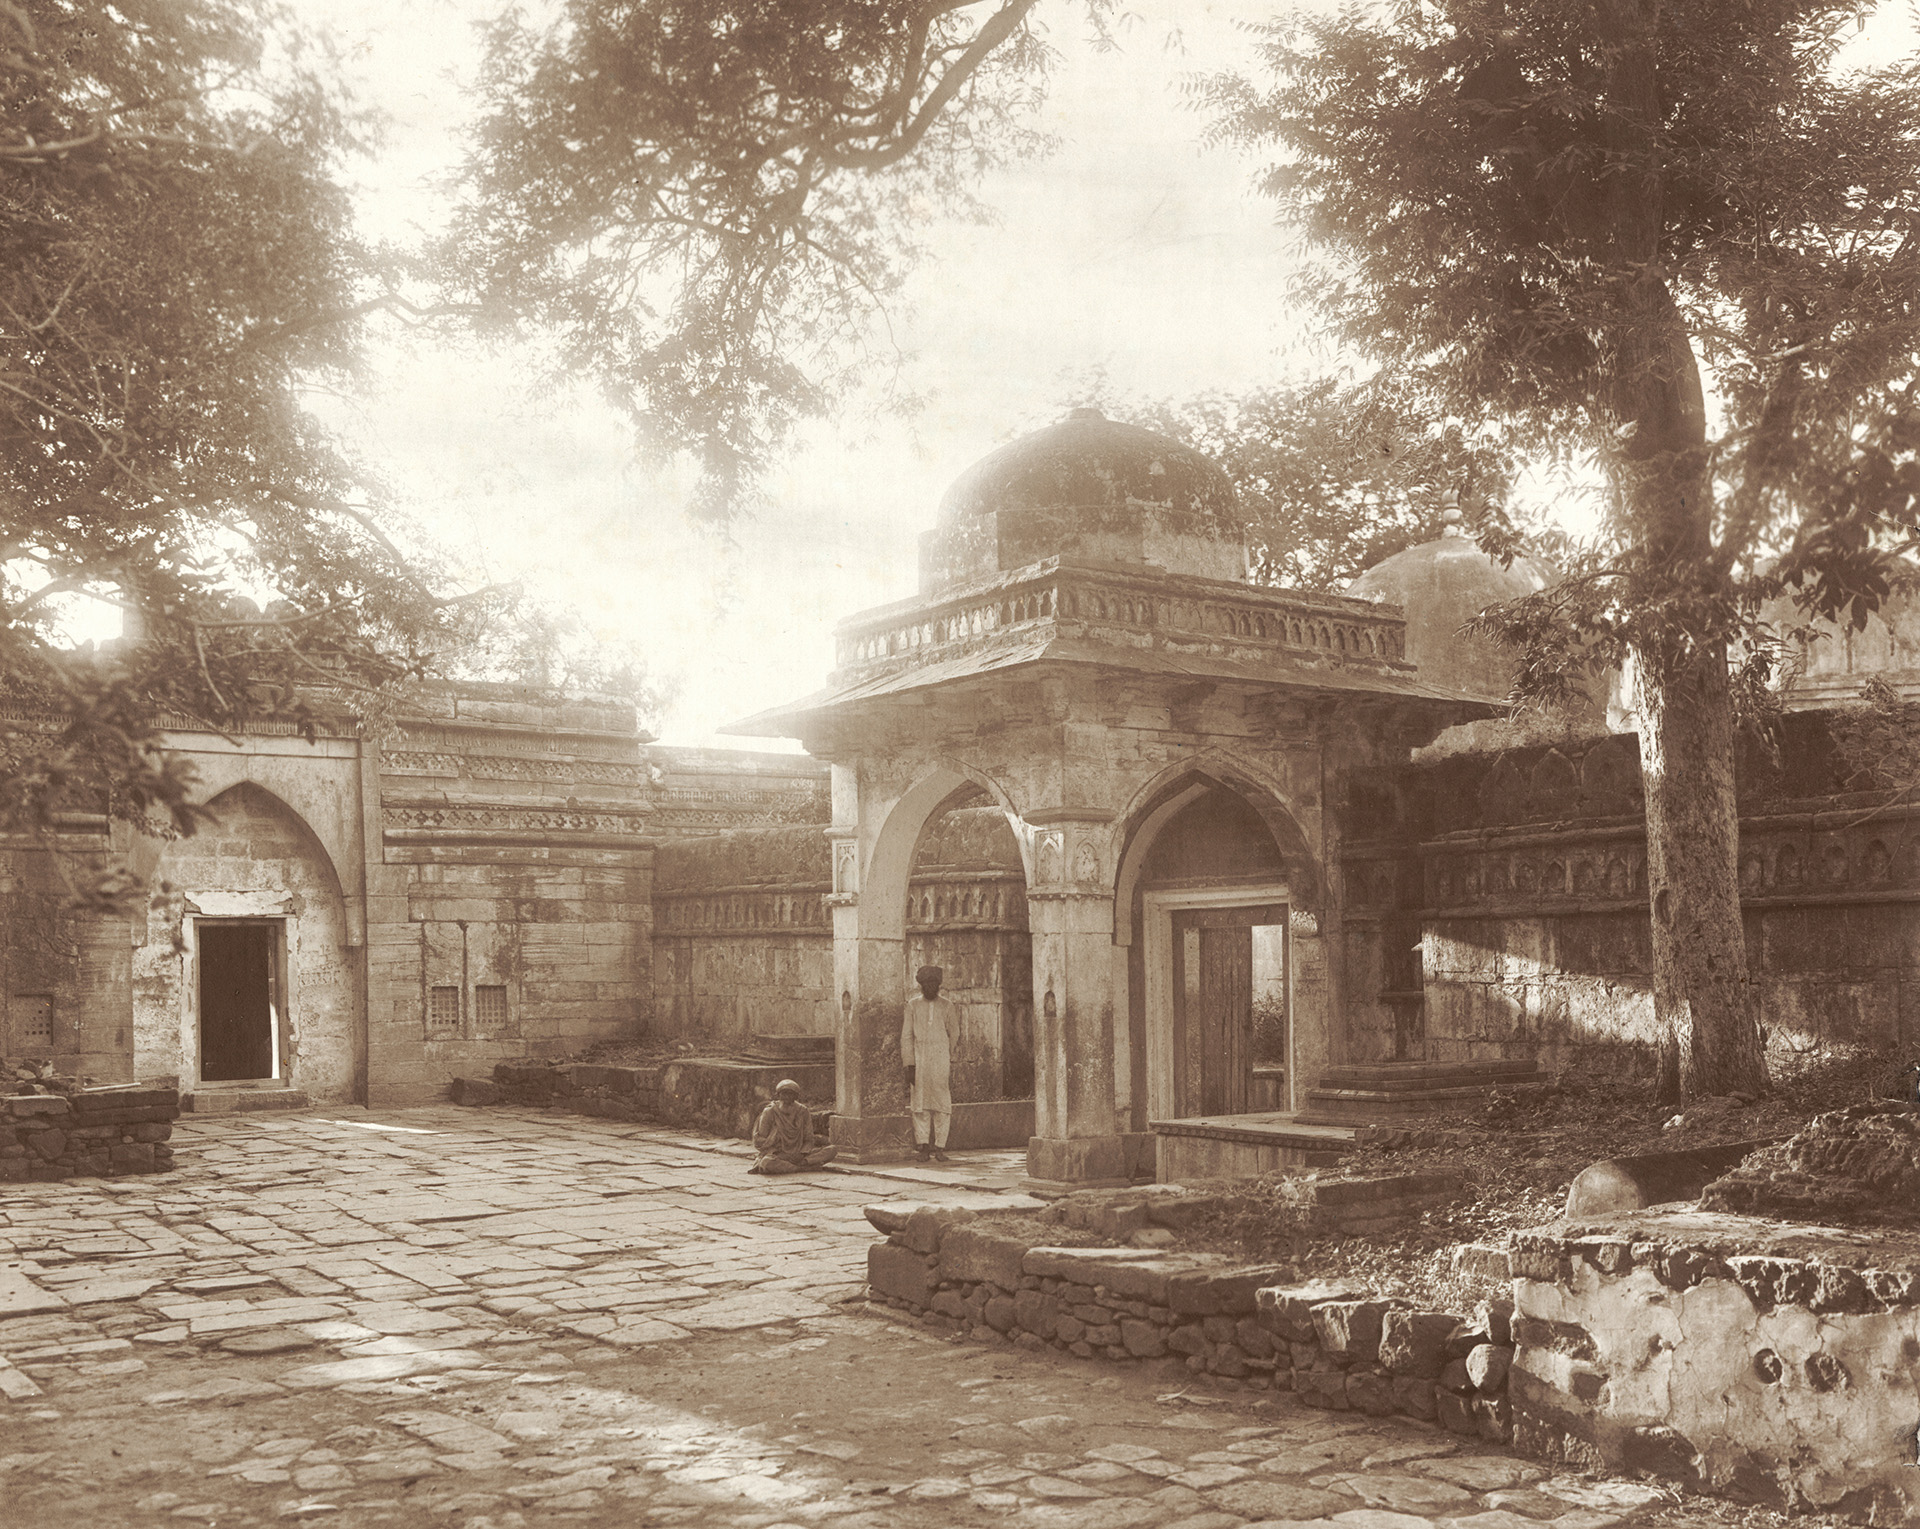 The Hindu Mahasabha’s mendacious attempt to recreate Ayodhya at Madhya Pradesh’s Kamal Maula mosque